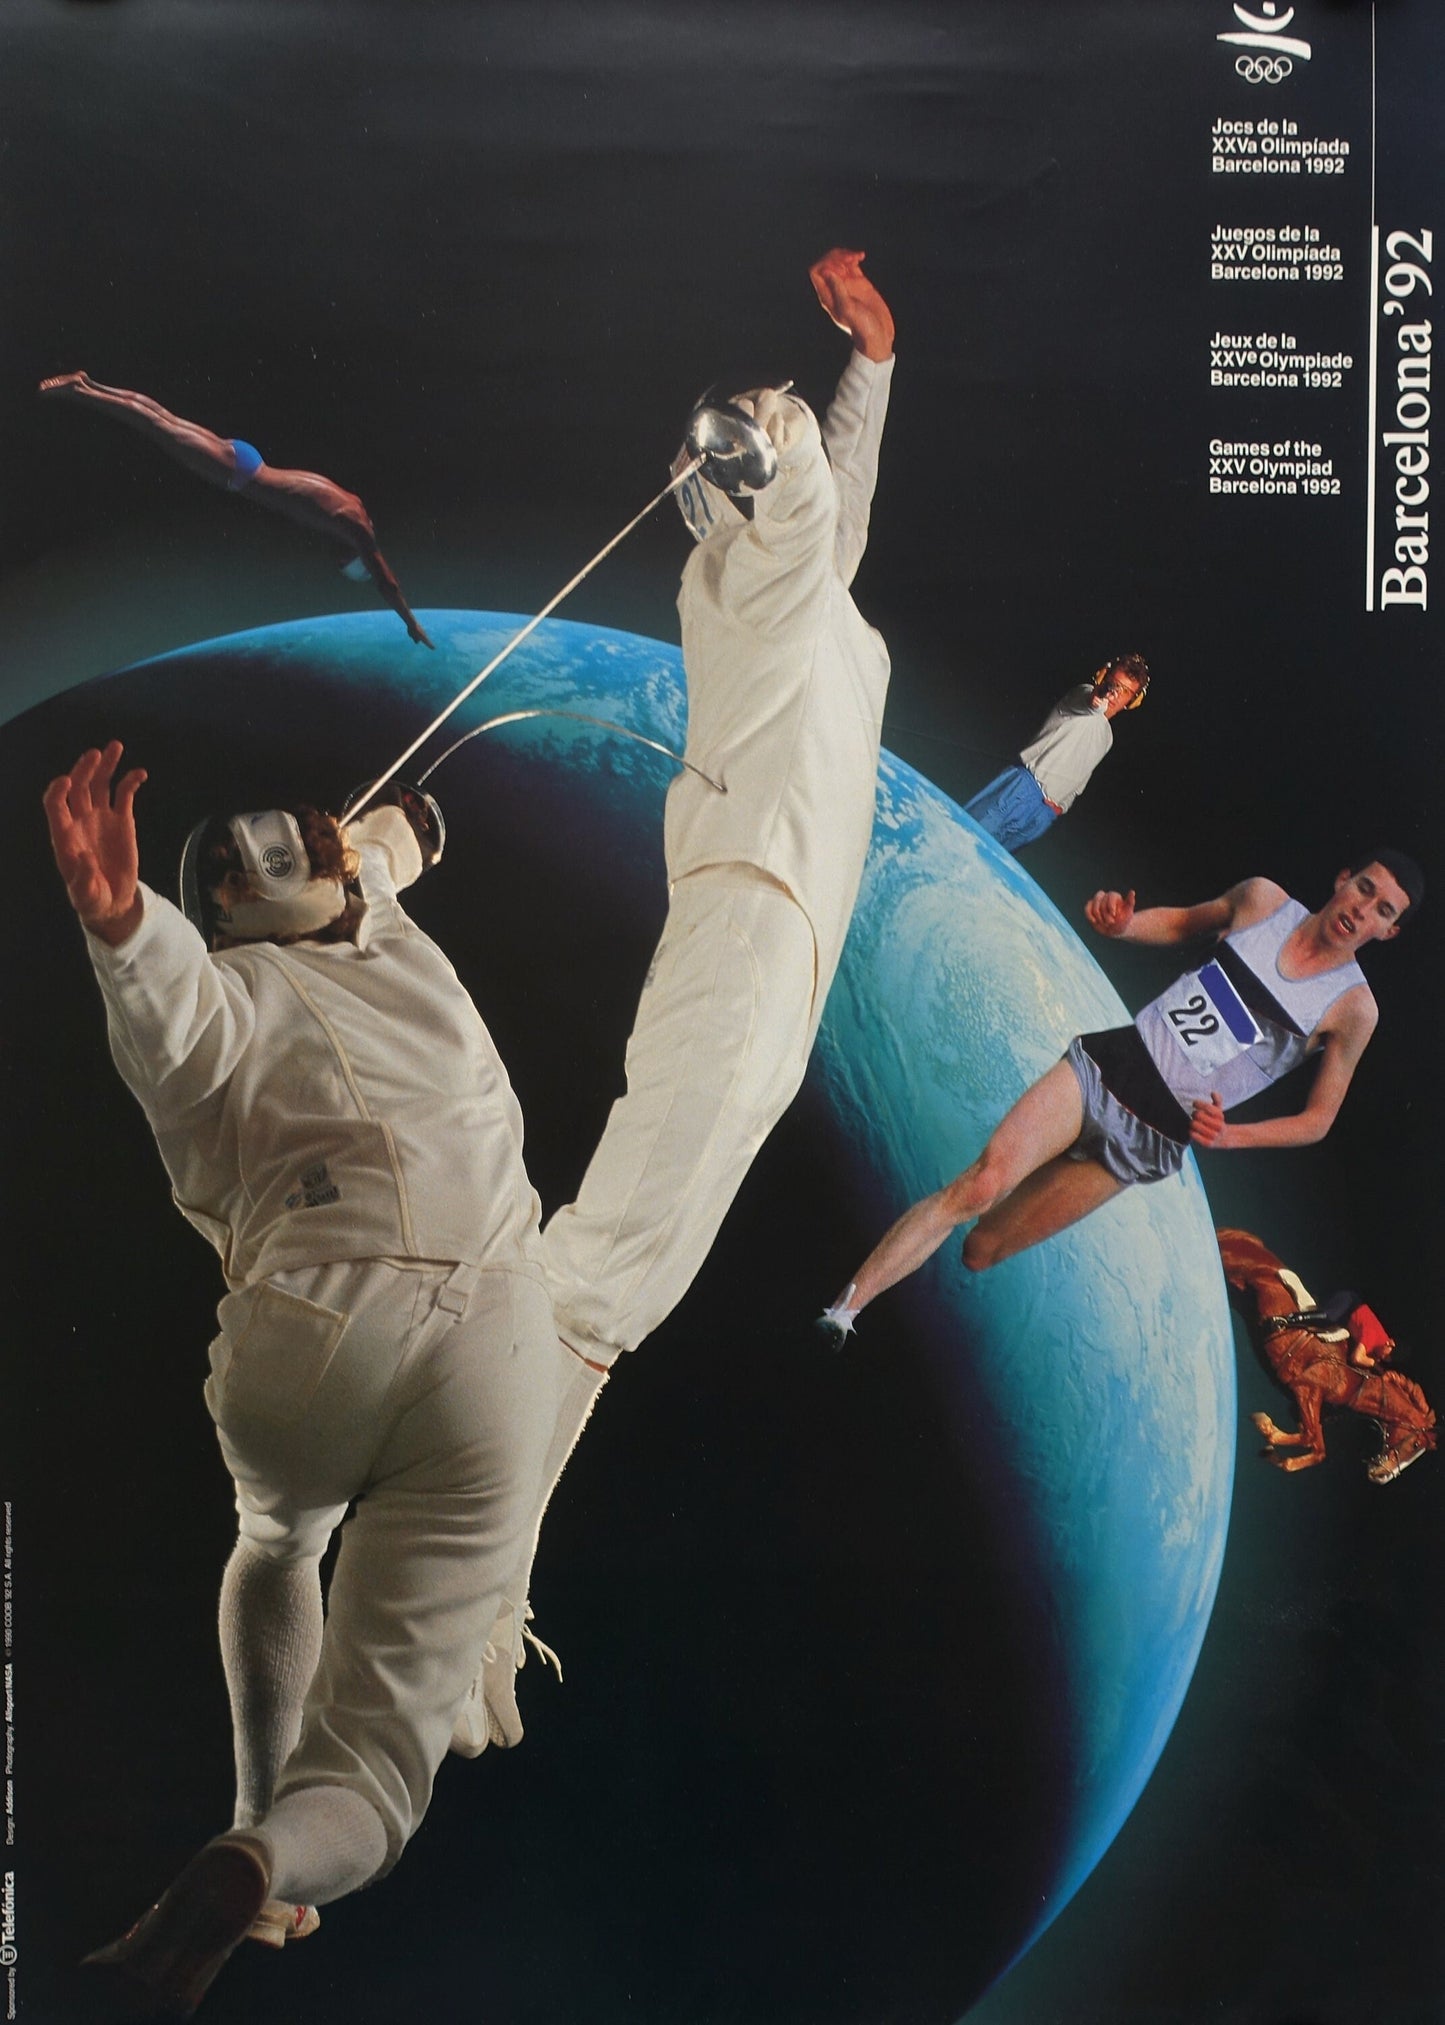 1992 Summer Olympic Games Various Athletes - Original Vintage Poster